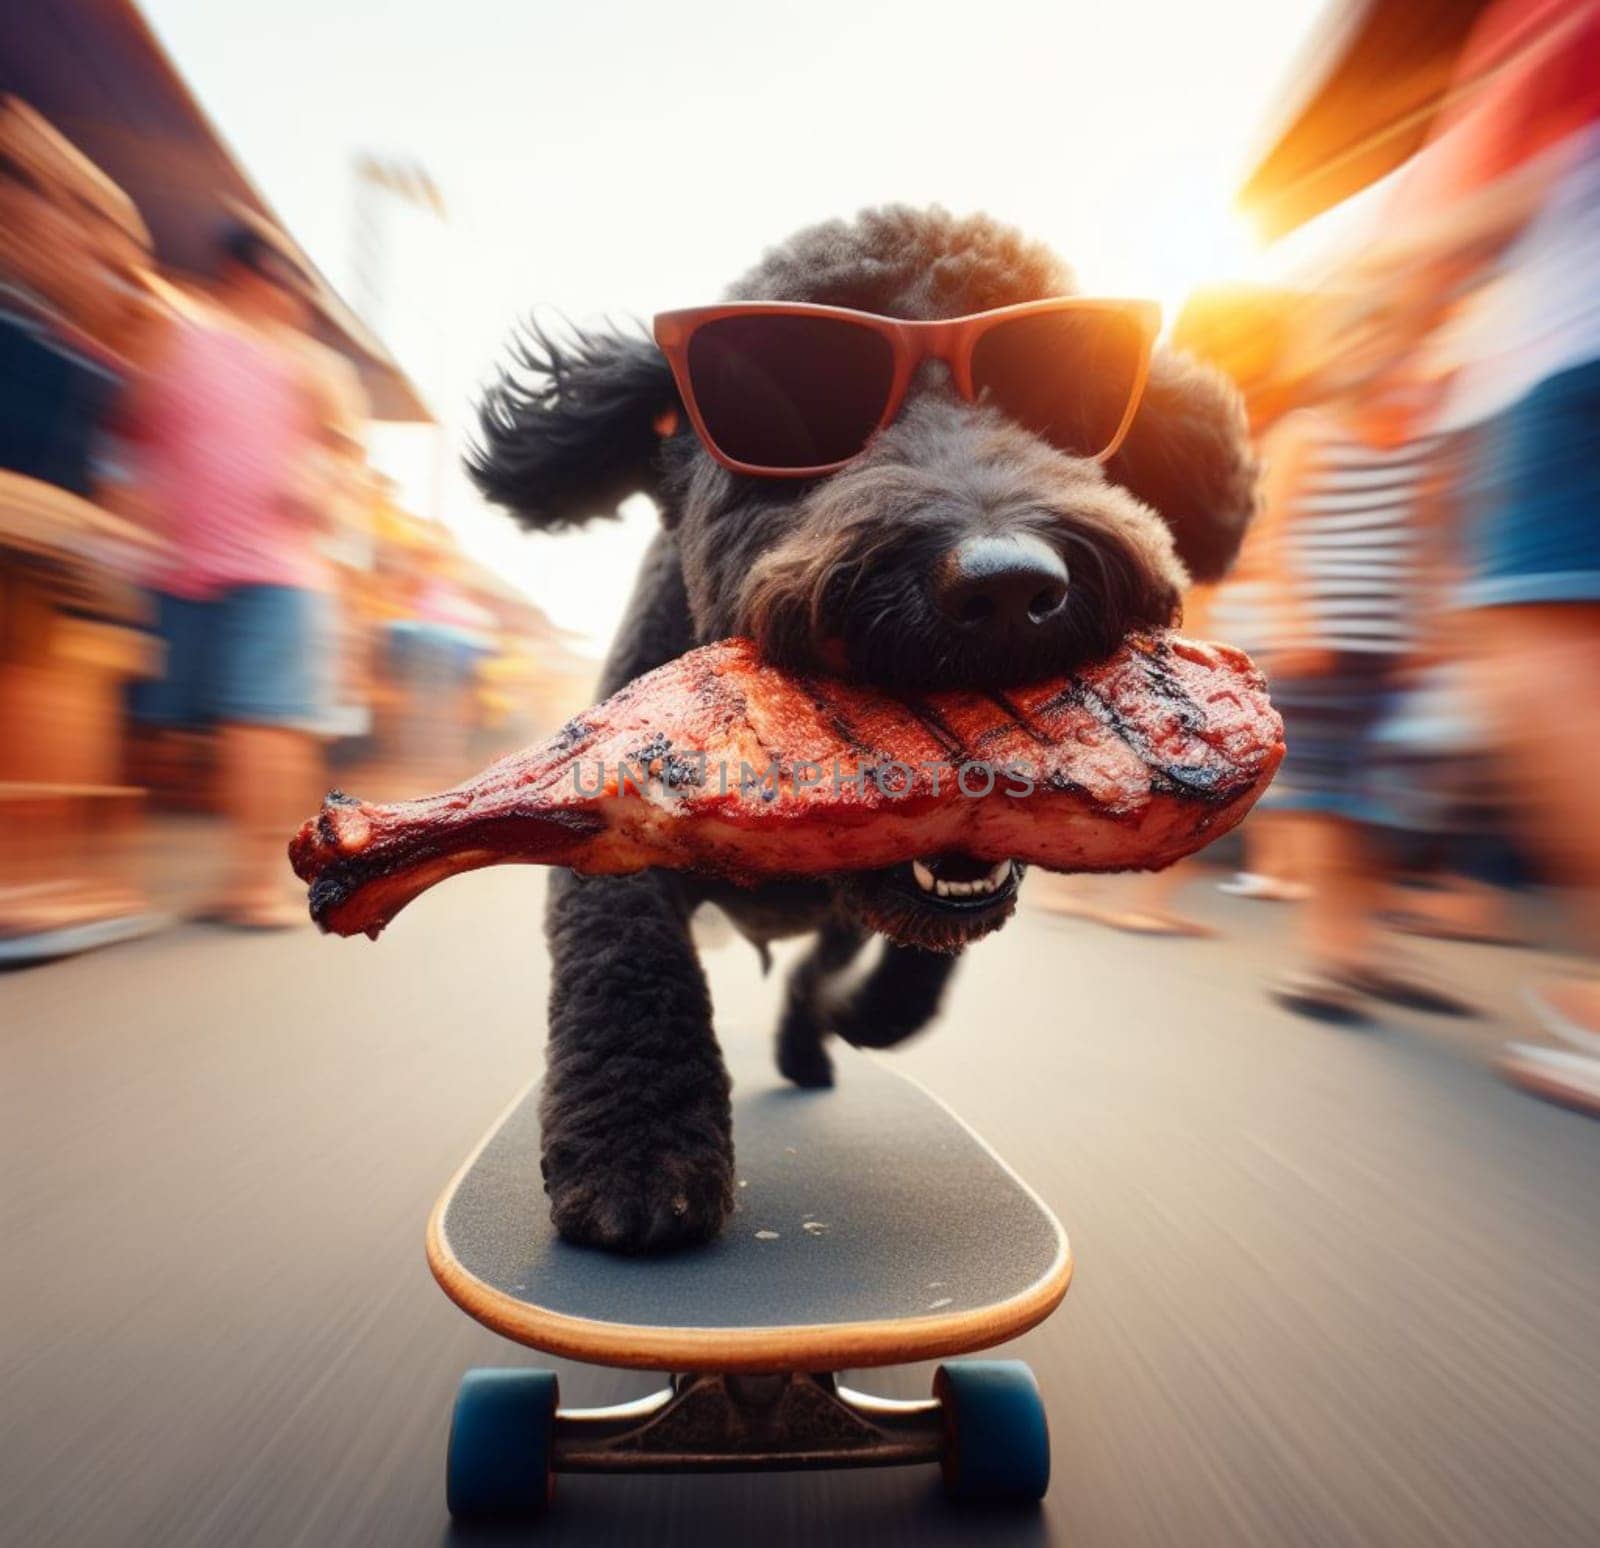 wise black terrier thieve wear cap sunglass escape on skateboard street market stolen grilled steak by verbano